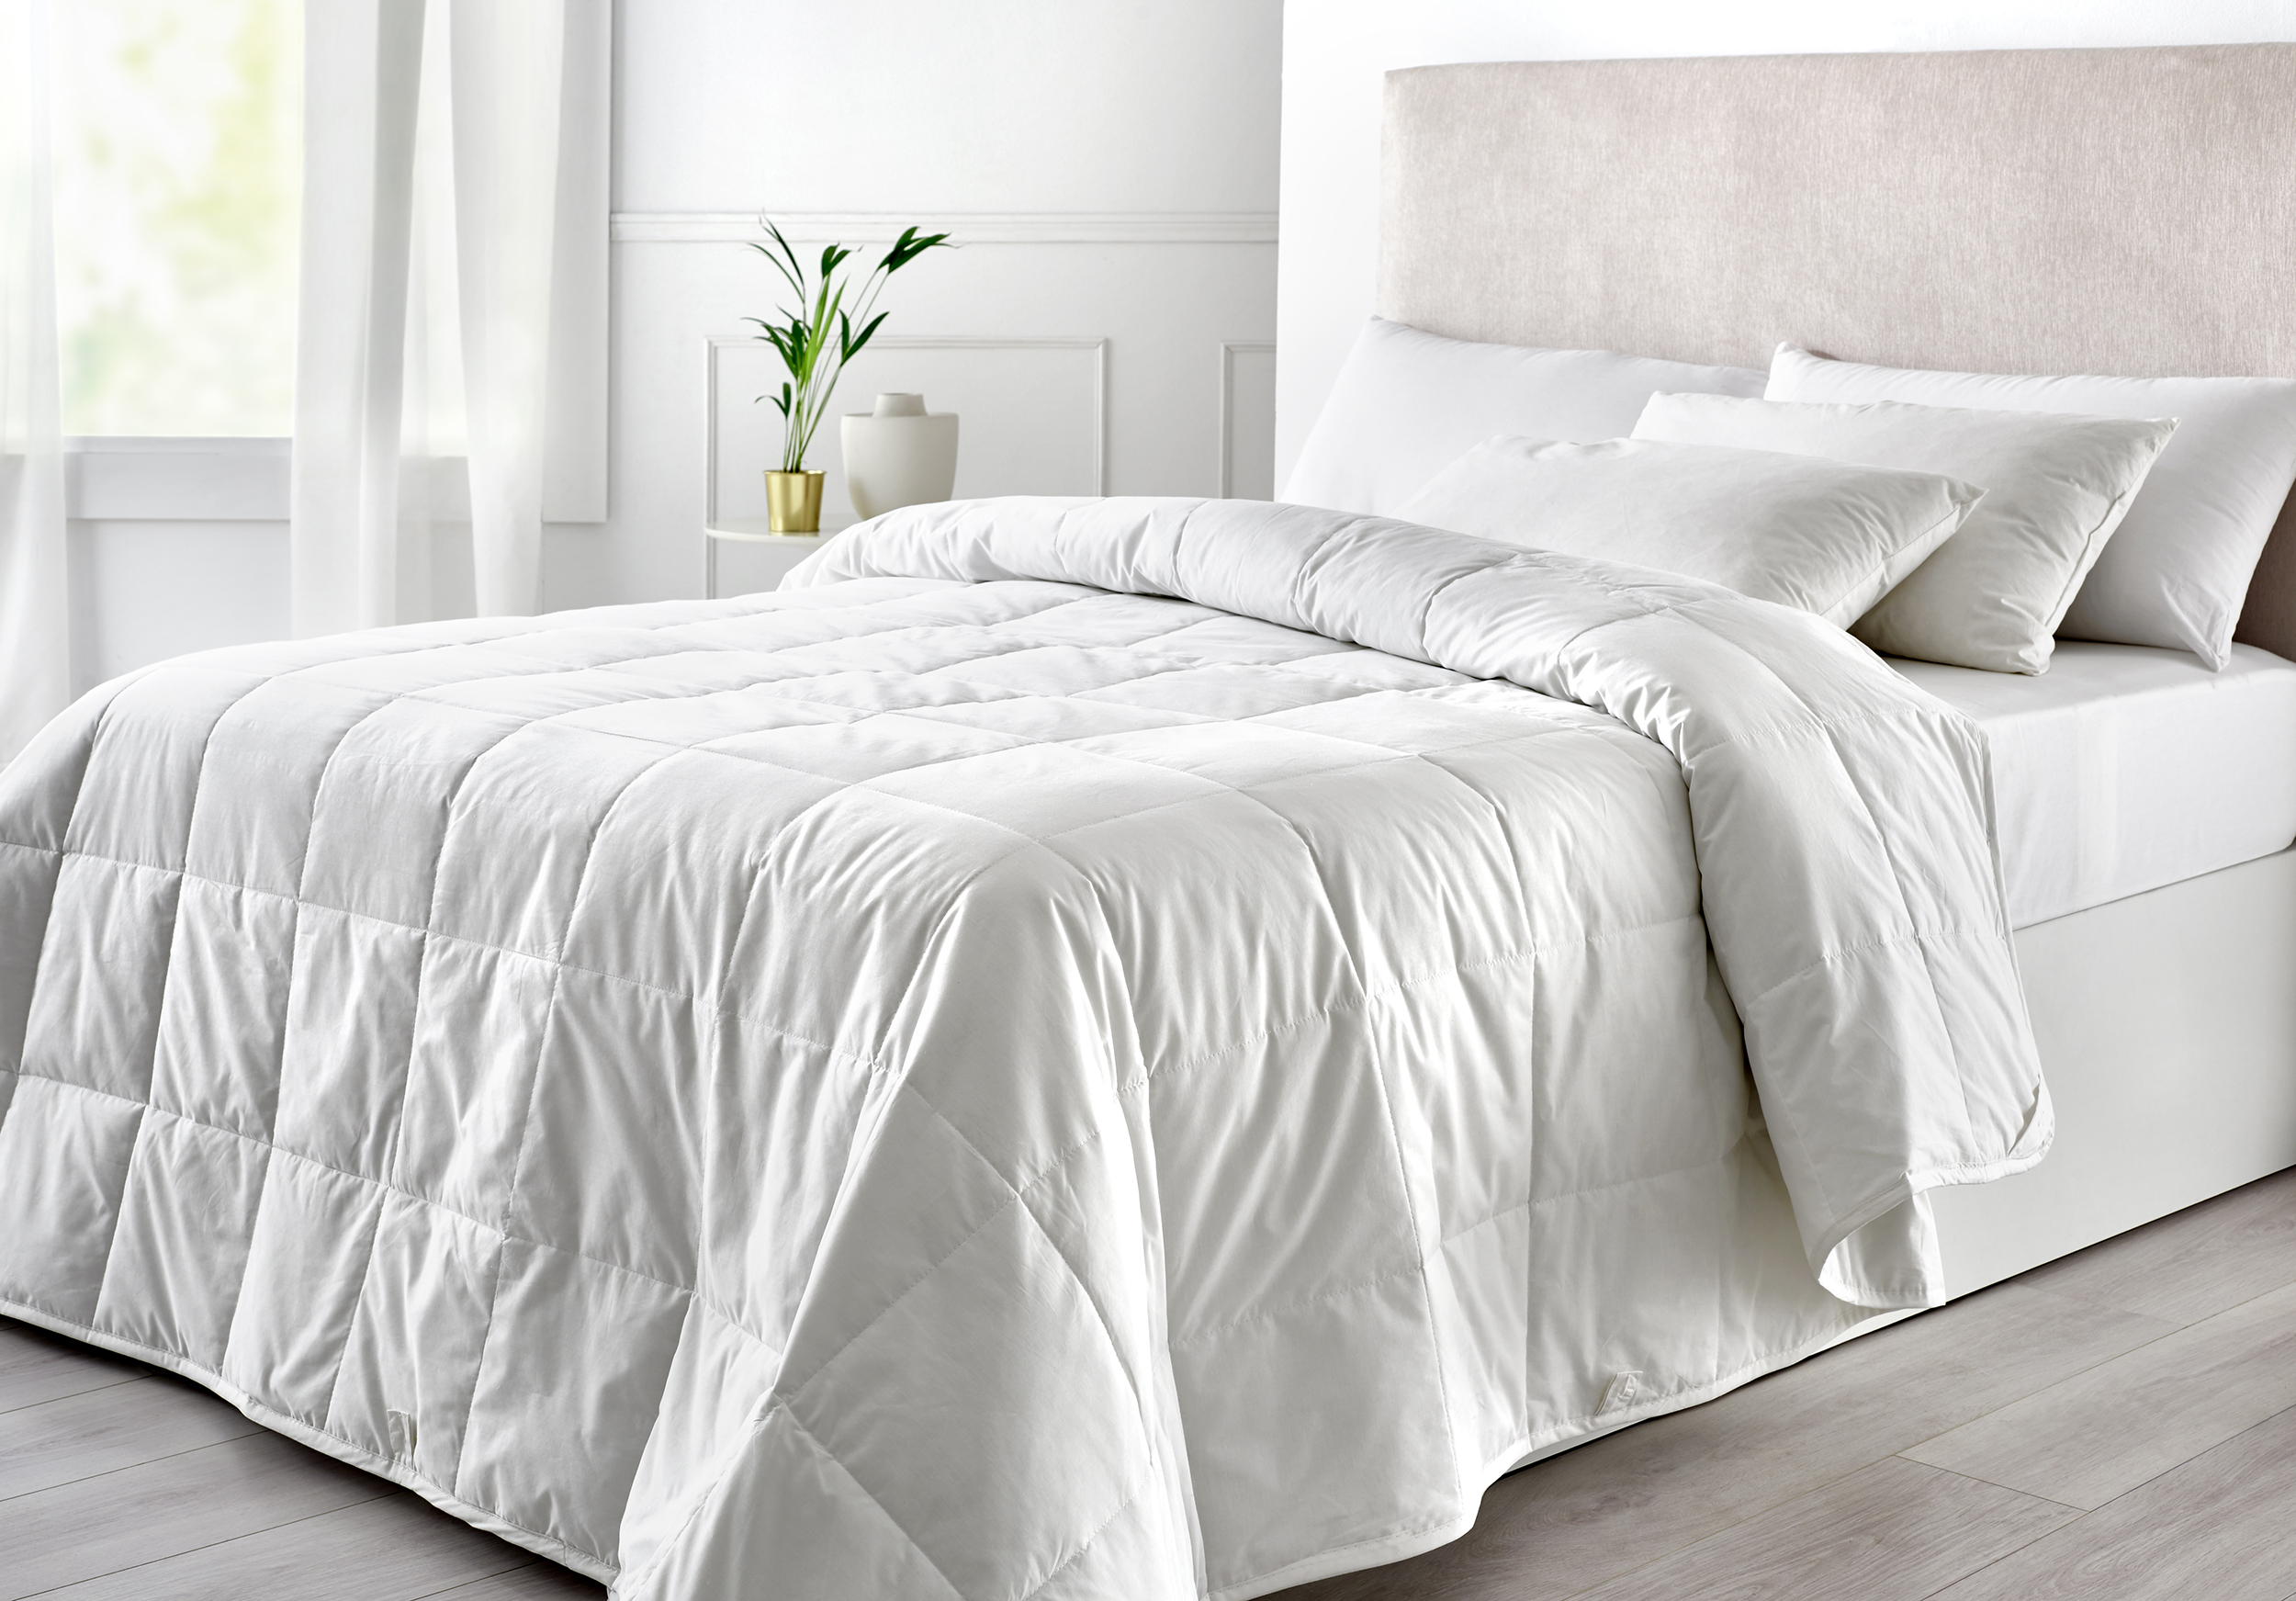 PIKOLIN HOME presenta sus complementos de cama en Home textiles Premium - Home textiles premium ...